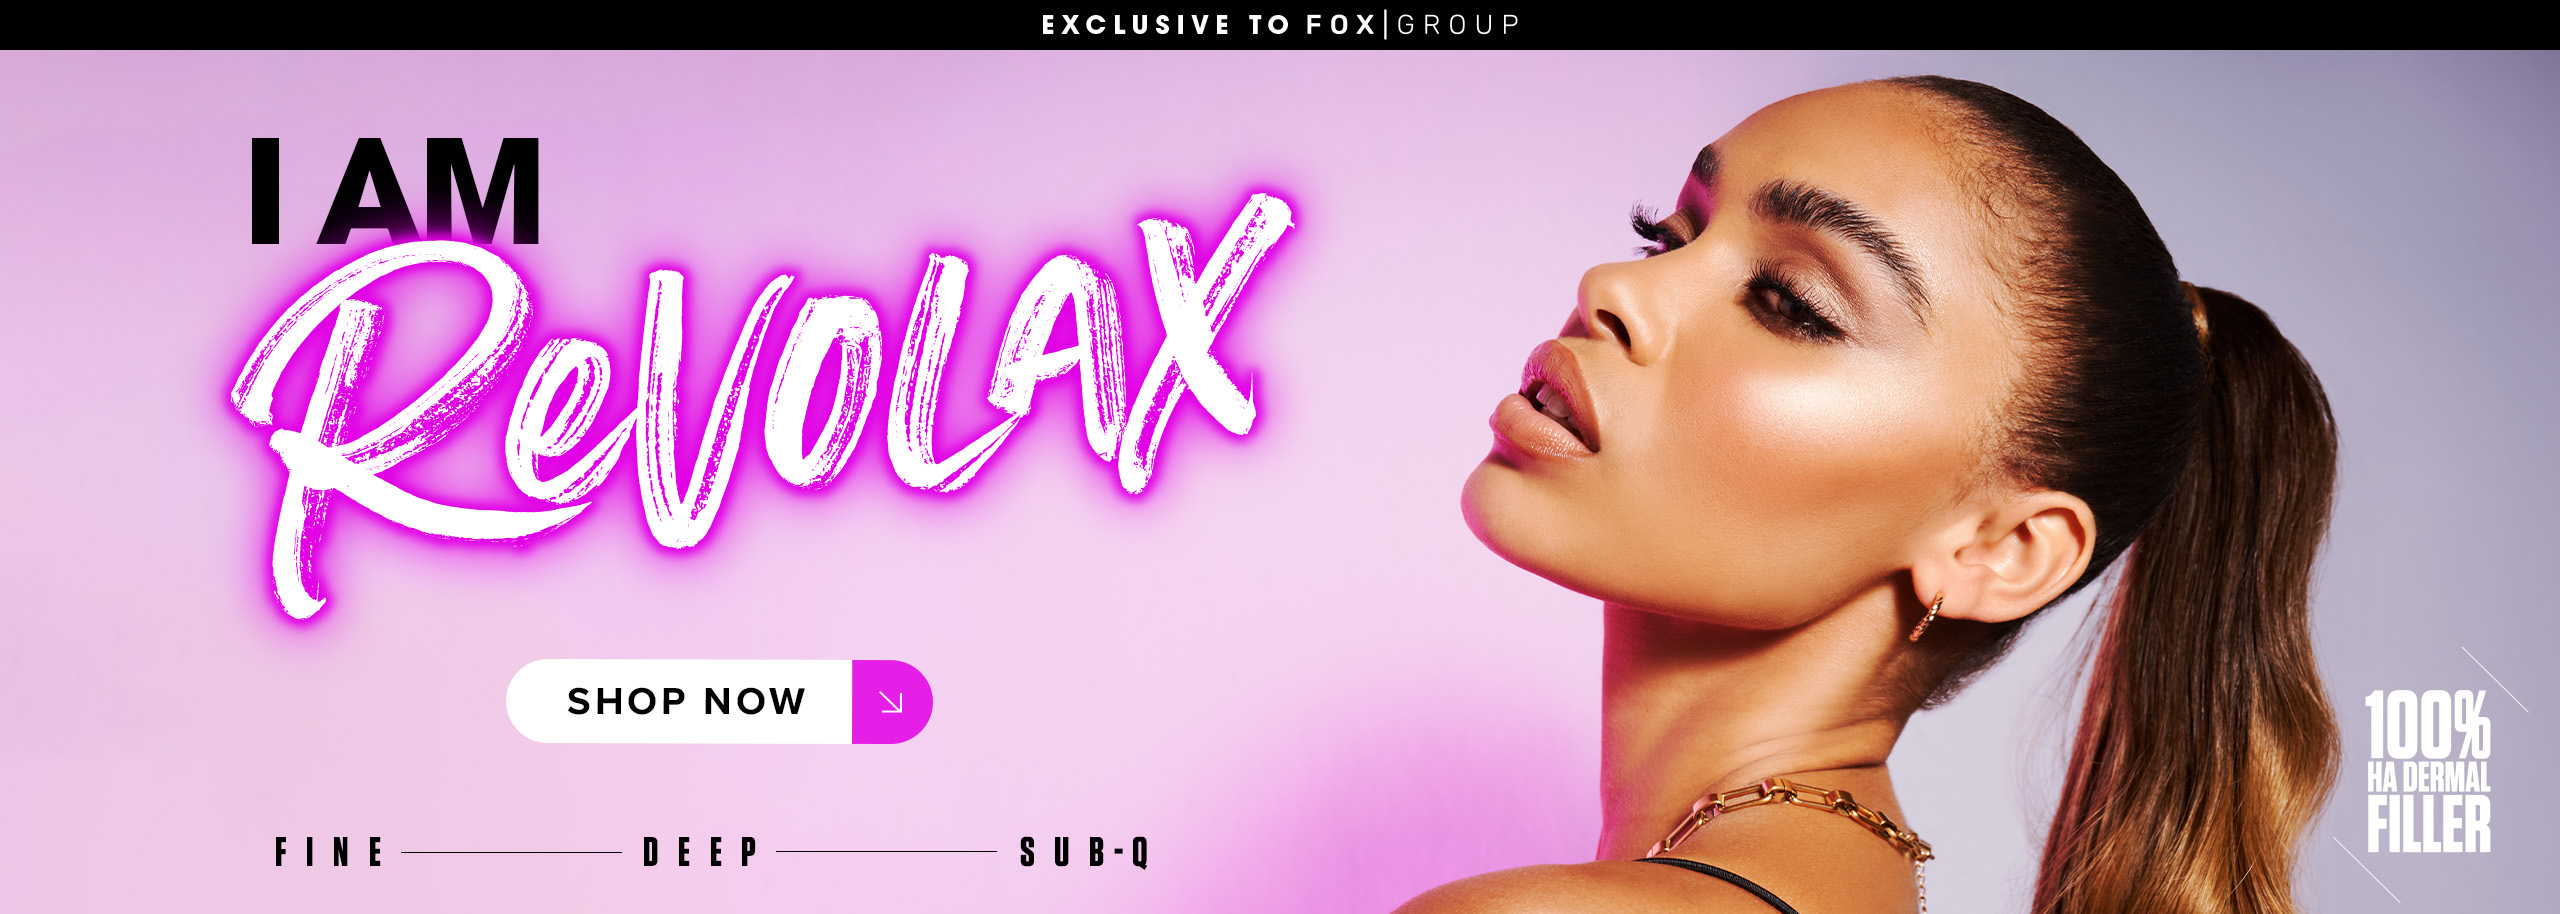 REVOLAX desktop banner